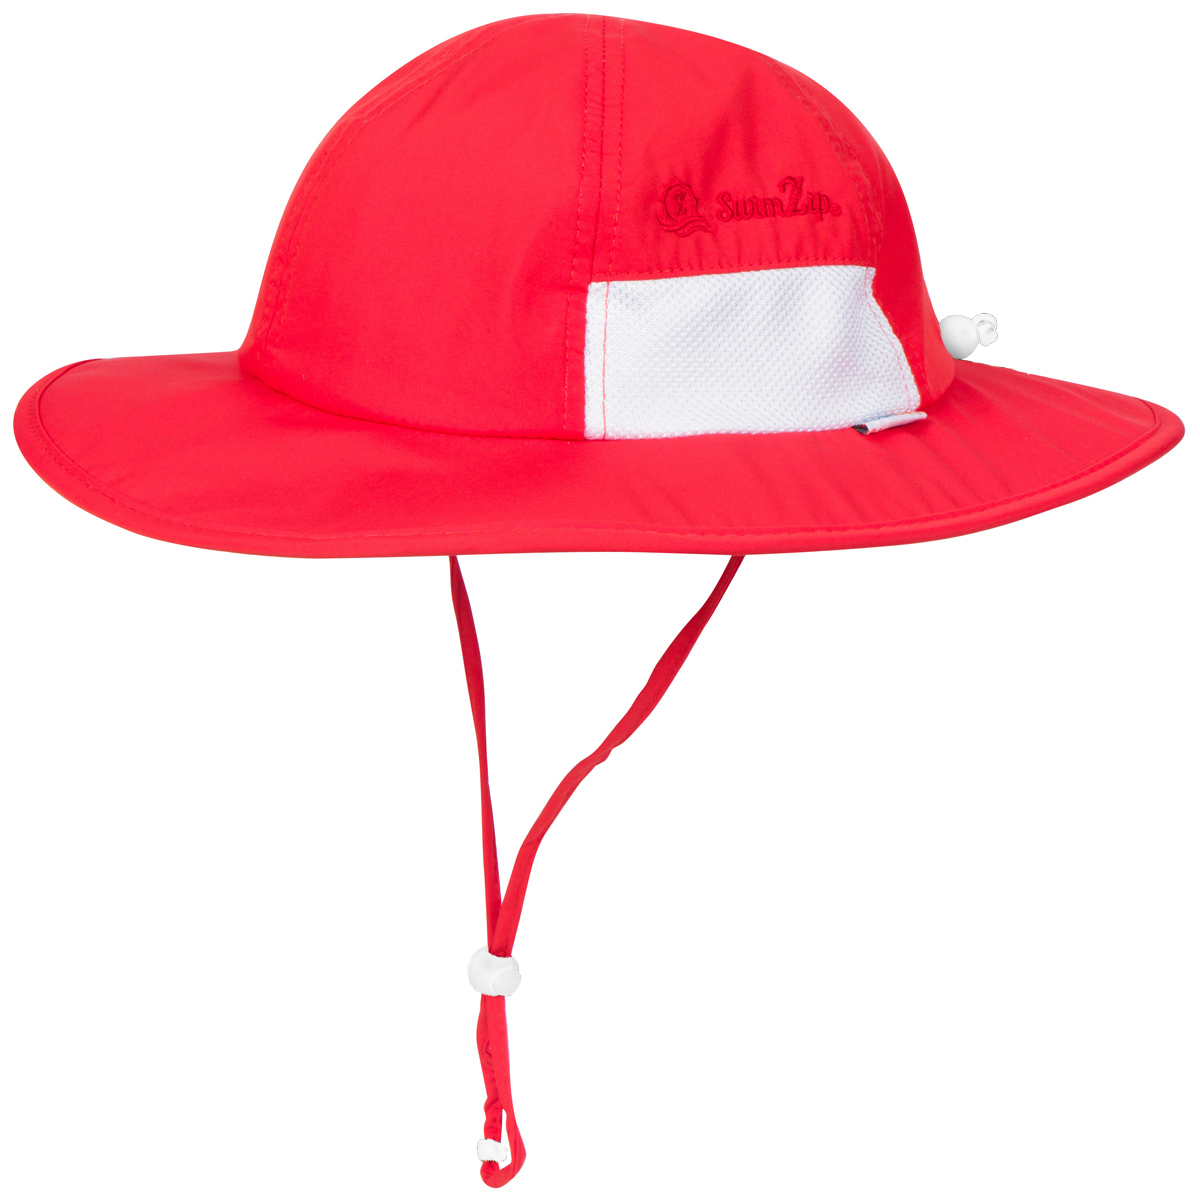 TOWED22 Kid's Cartoon Sun Hat Wide Brim UPF 50+ Protection Hat For Toddler  Boys Girls Adjustable Bucket Hat Kids Baseball Caps,Orange 